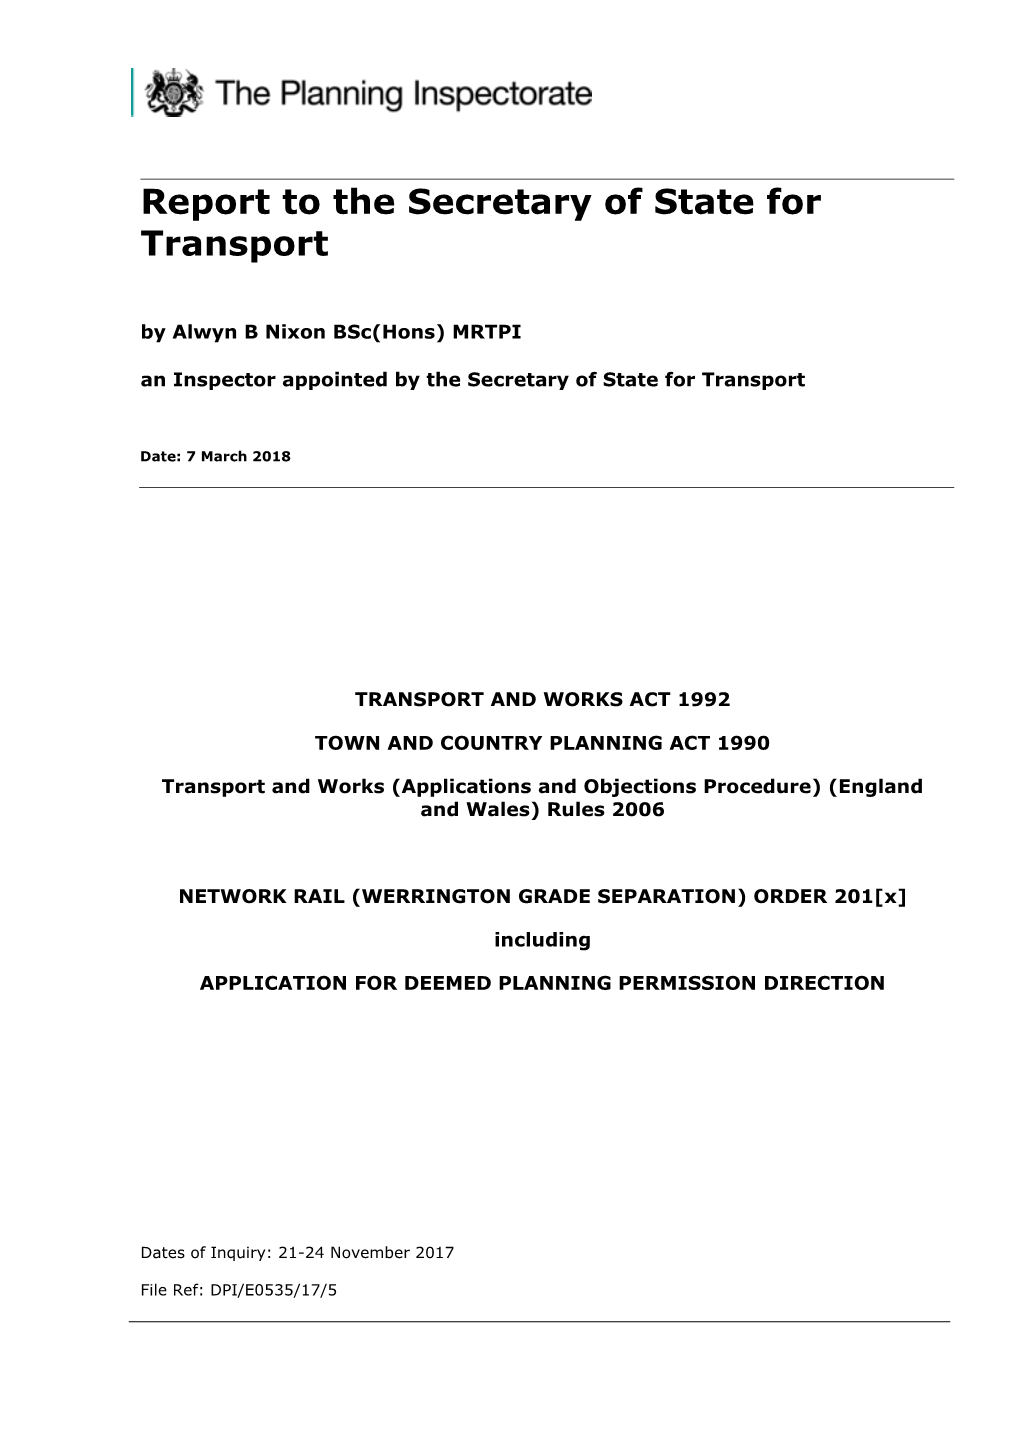 Network Rail (Werrington Grade Separation) Order Inspector's Report